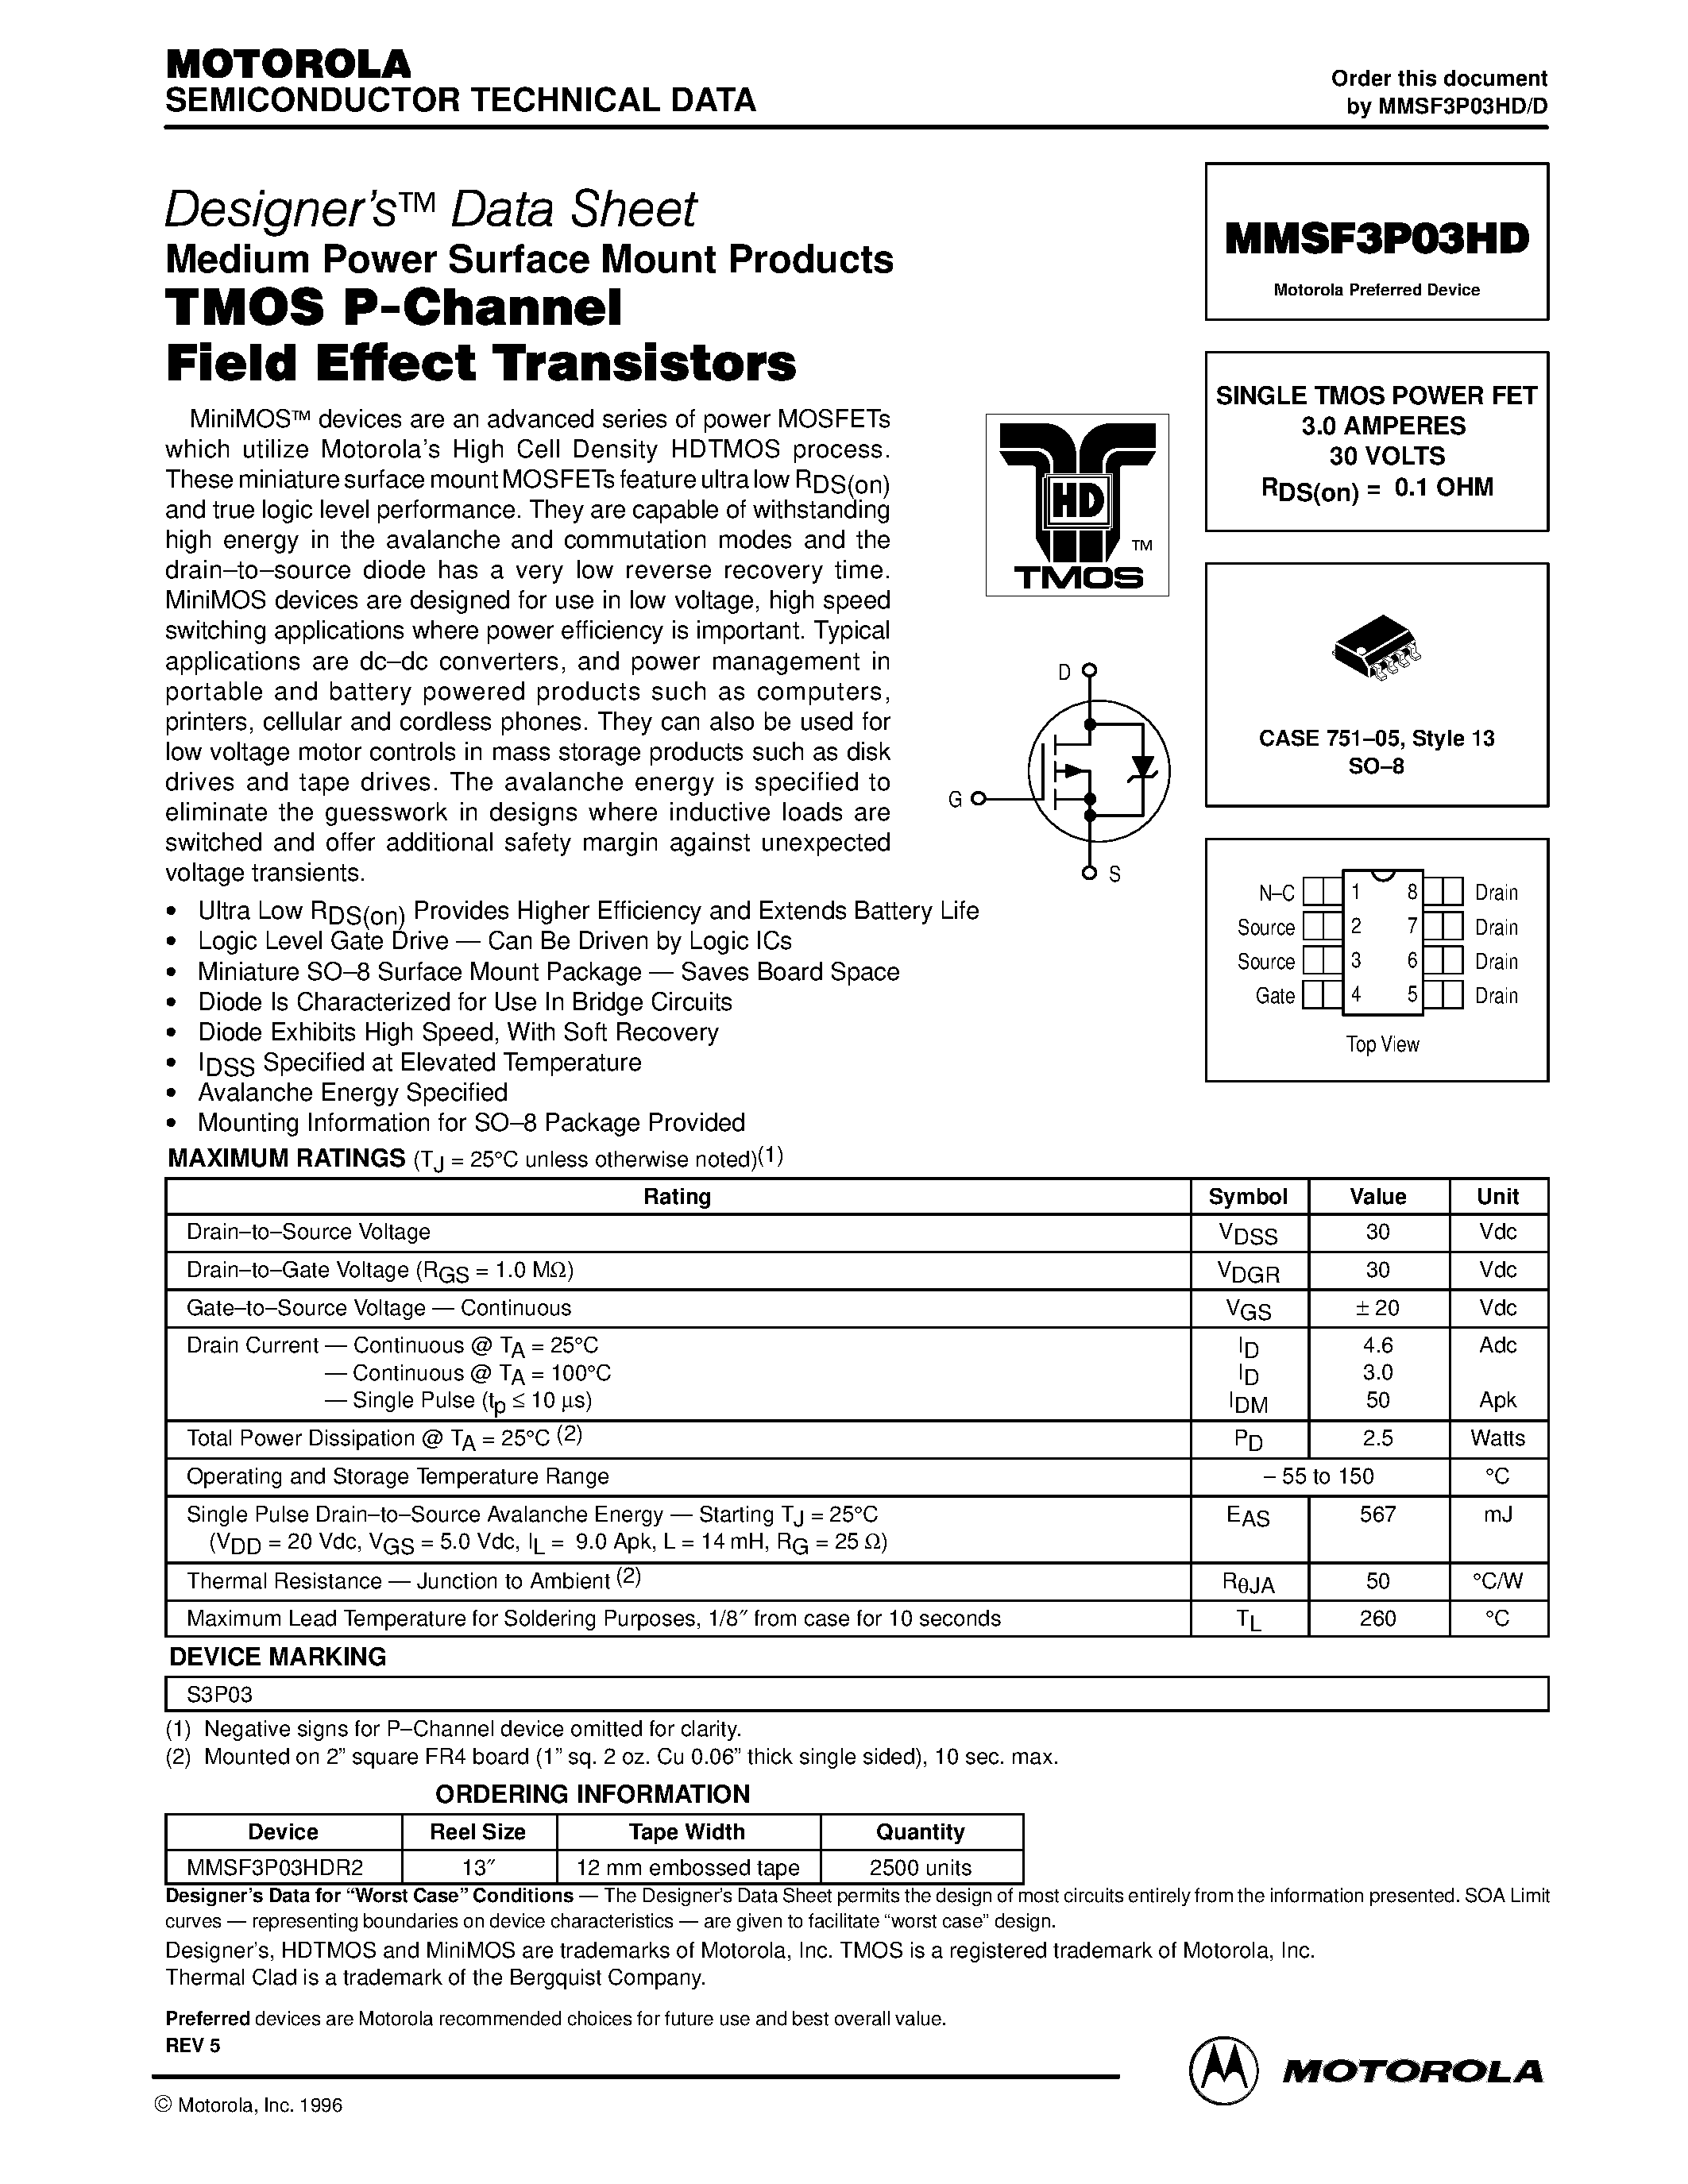 Datasheet MMSF3P03HD - SINGLE TMOS POWER FET 3.0 AMPERES 30 VOLTS page 1